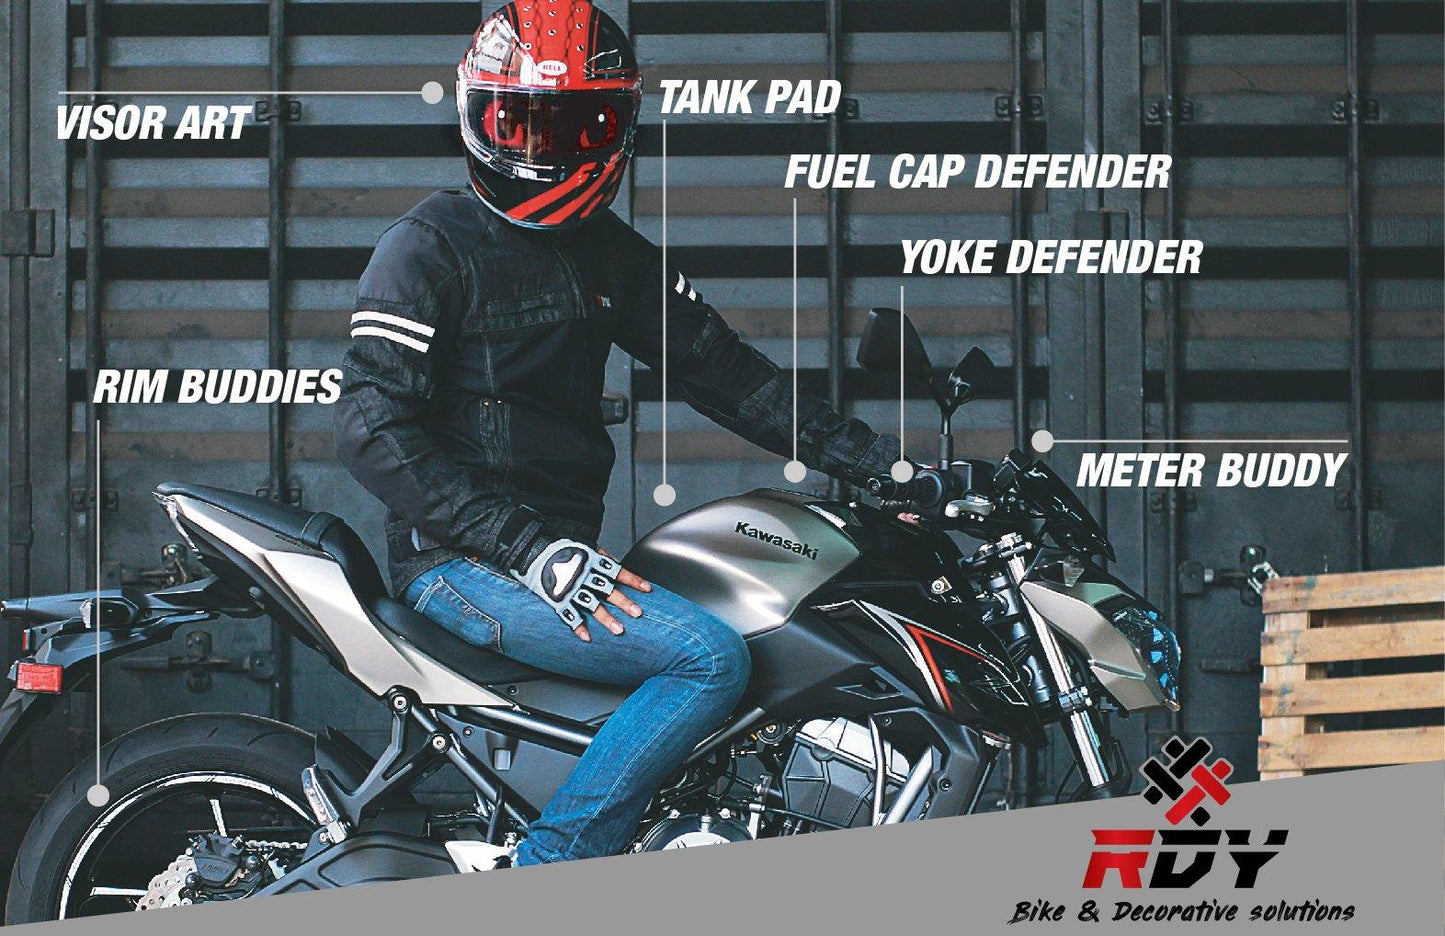 RDY Yoke Defender fits for Honda CBR1100 ('02-'06) - Durian Bikers